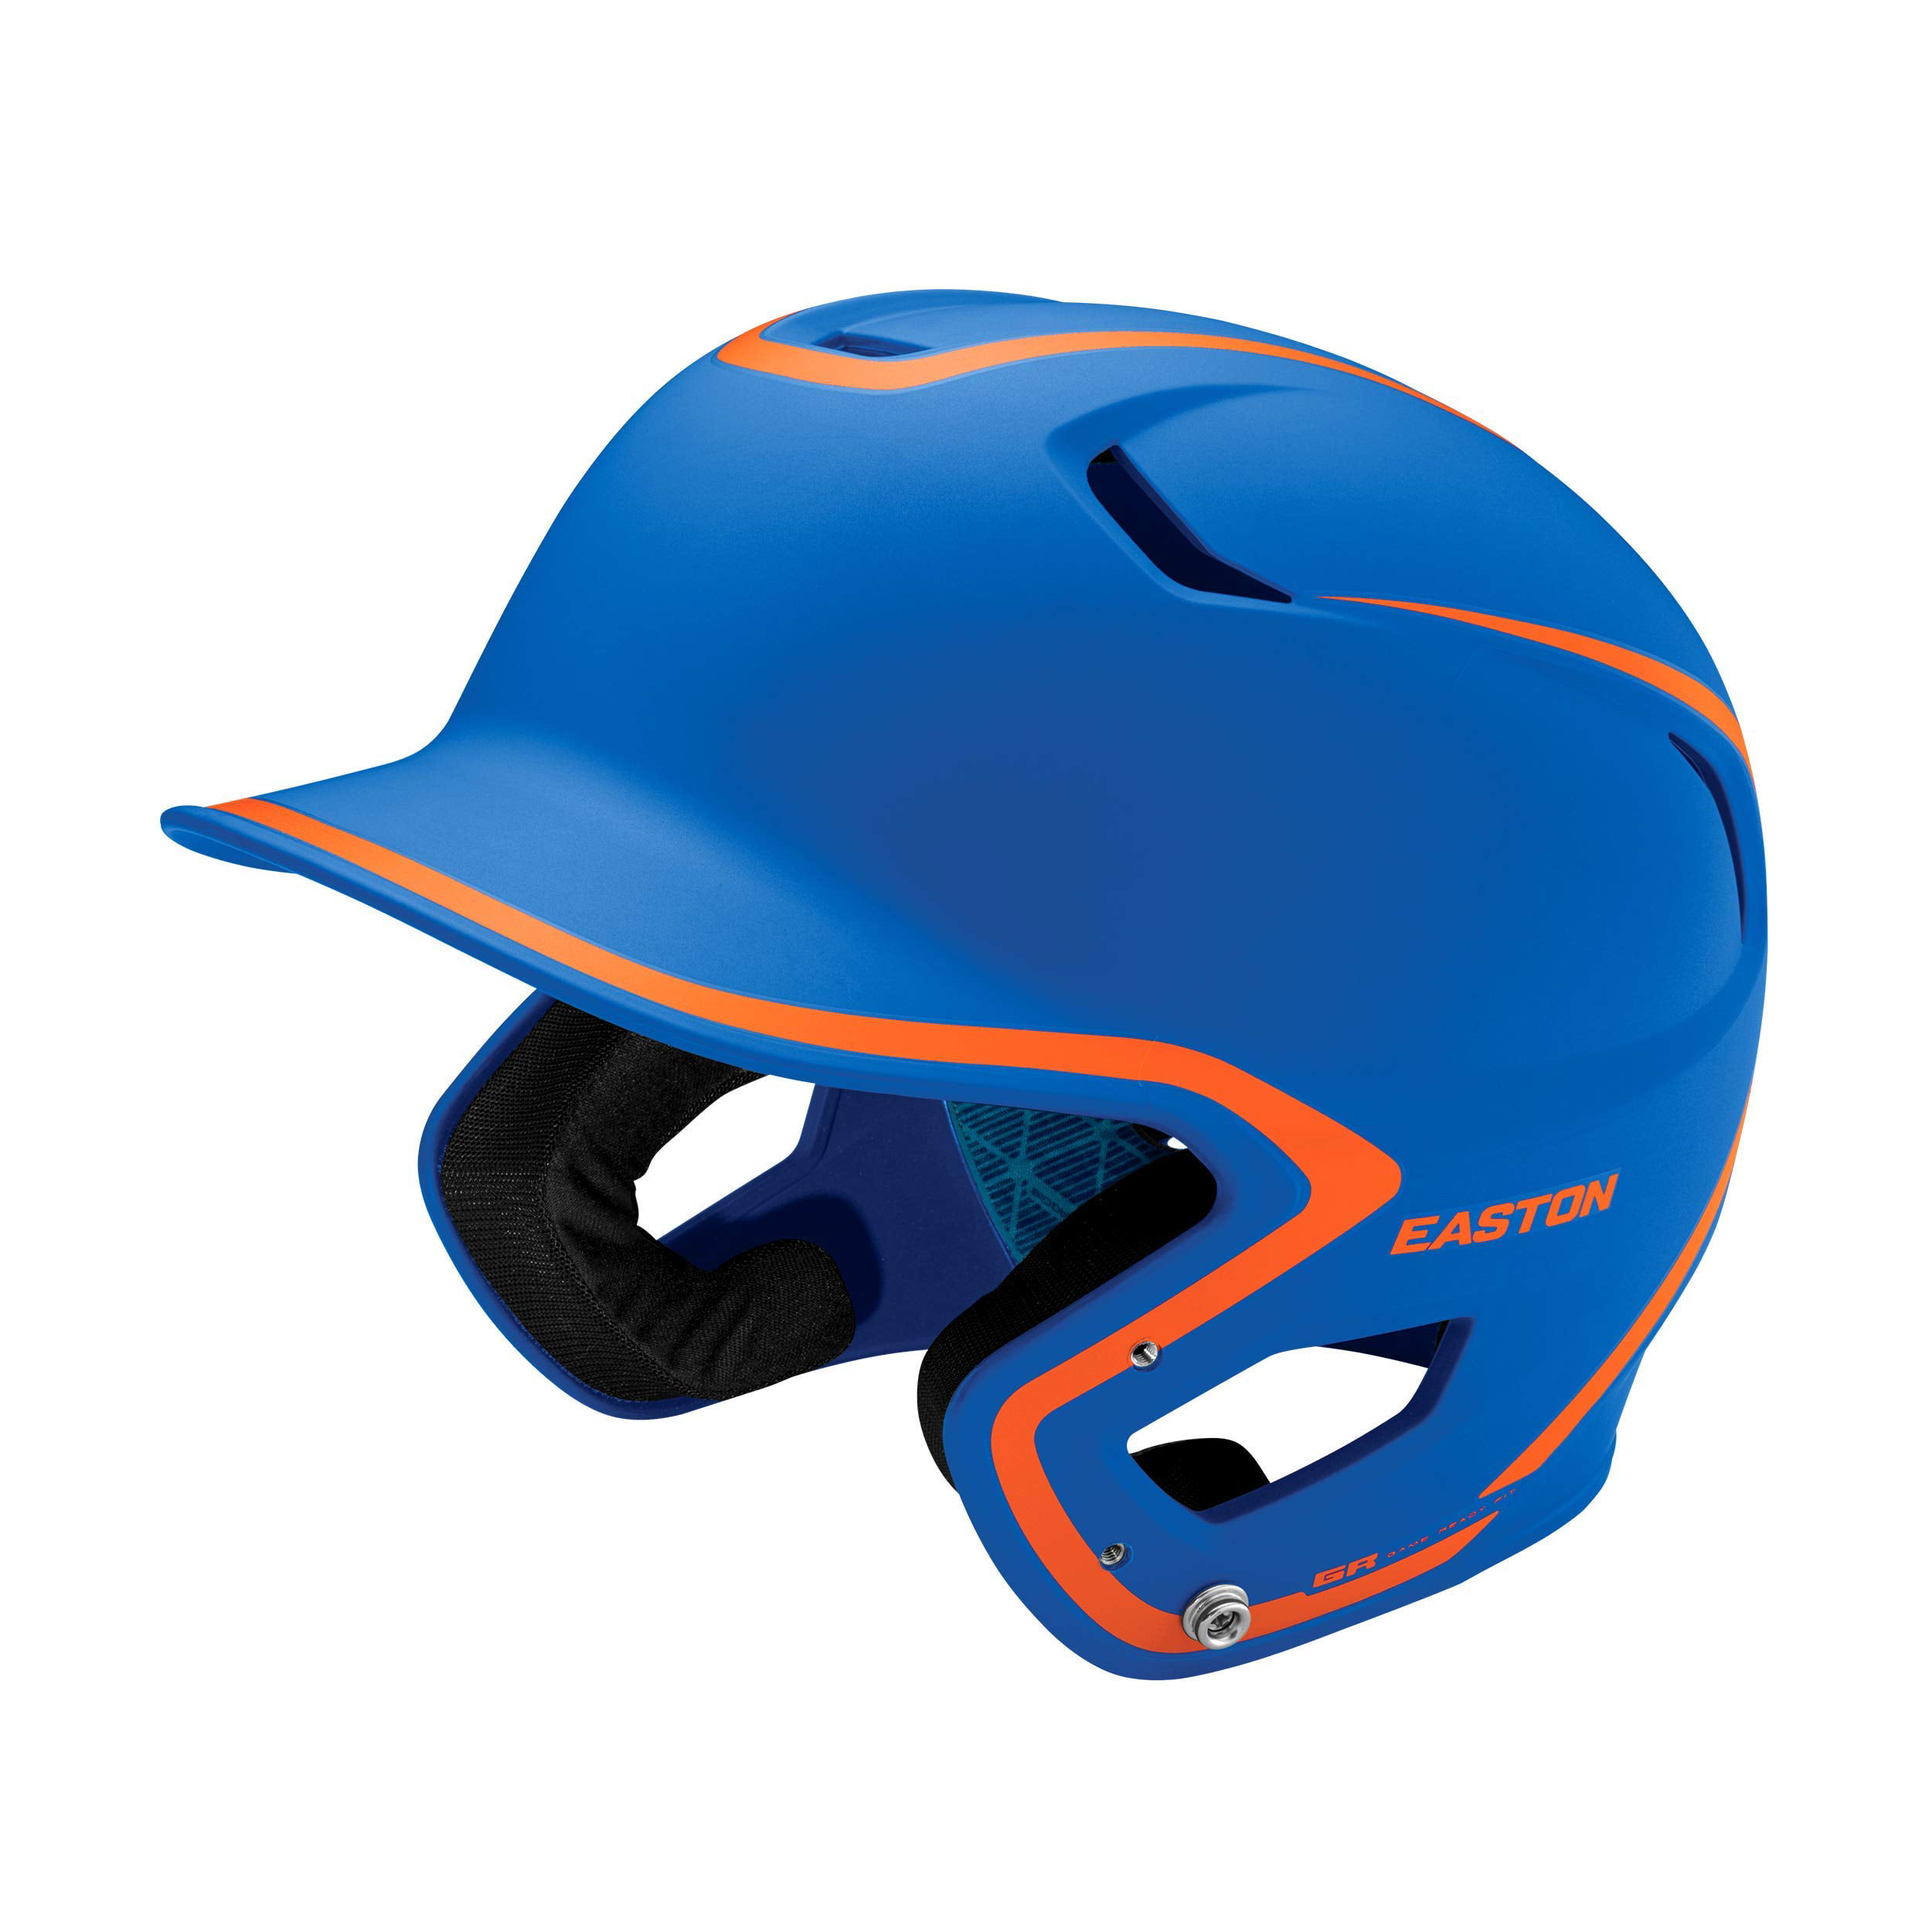 NEW Easton Z5 Senior Adult Baseball Batting Helmet Black with Mask Lists@$40